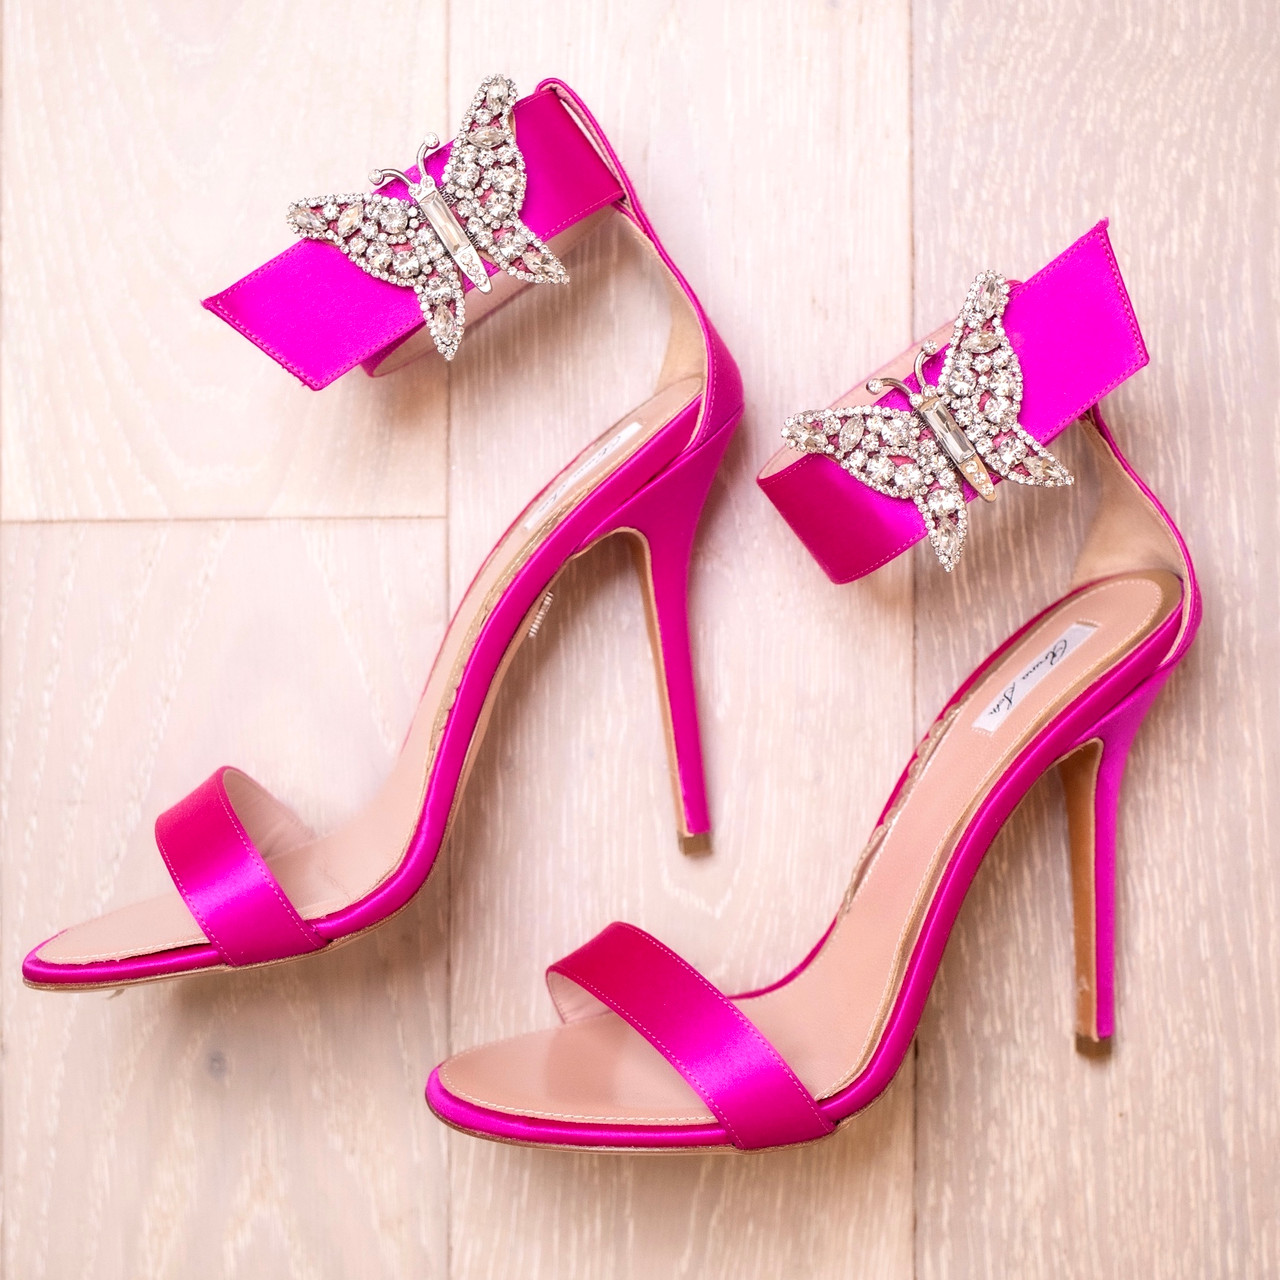 neon pink sandal heels